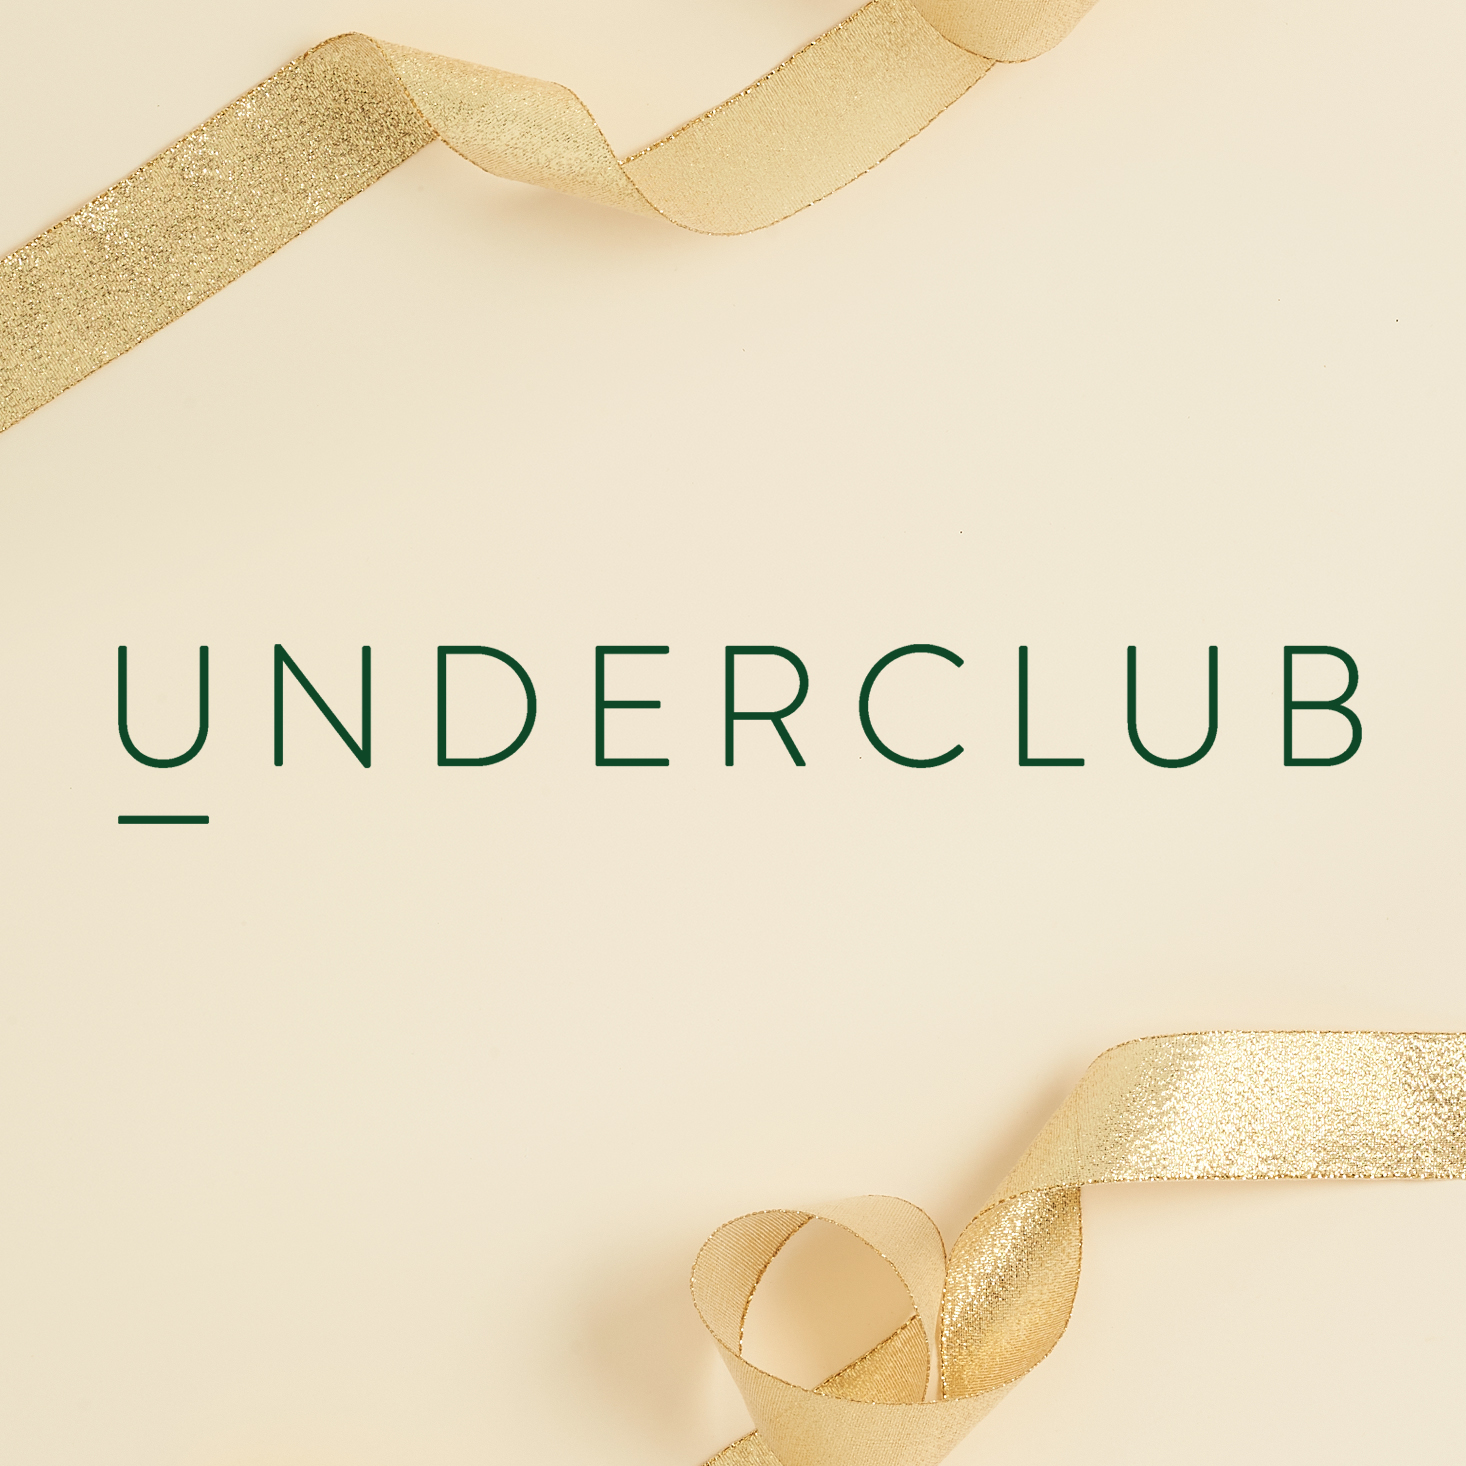 Underclub – Better Than Black Friday 2020 Deal!